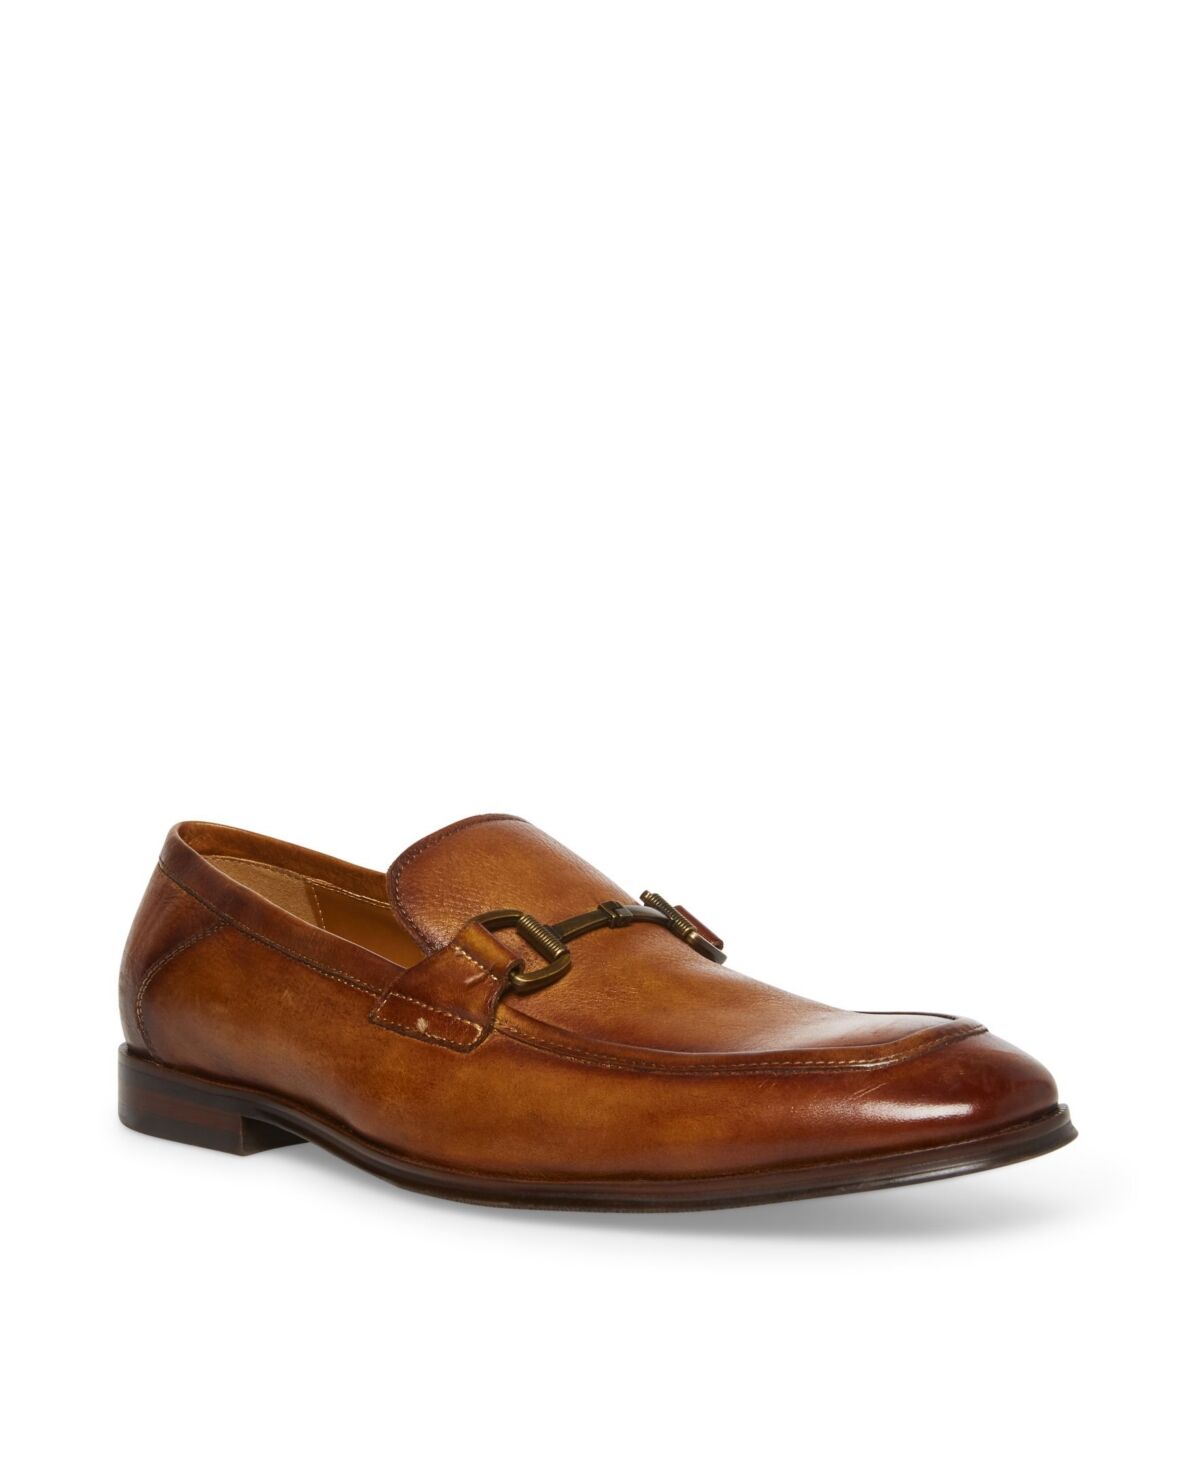 Steve Madden Men's Aahron Loafer Shoes - Tan Leather